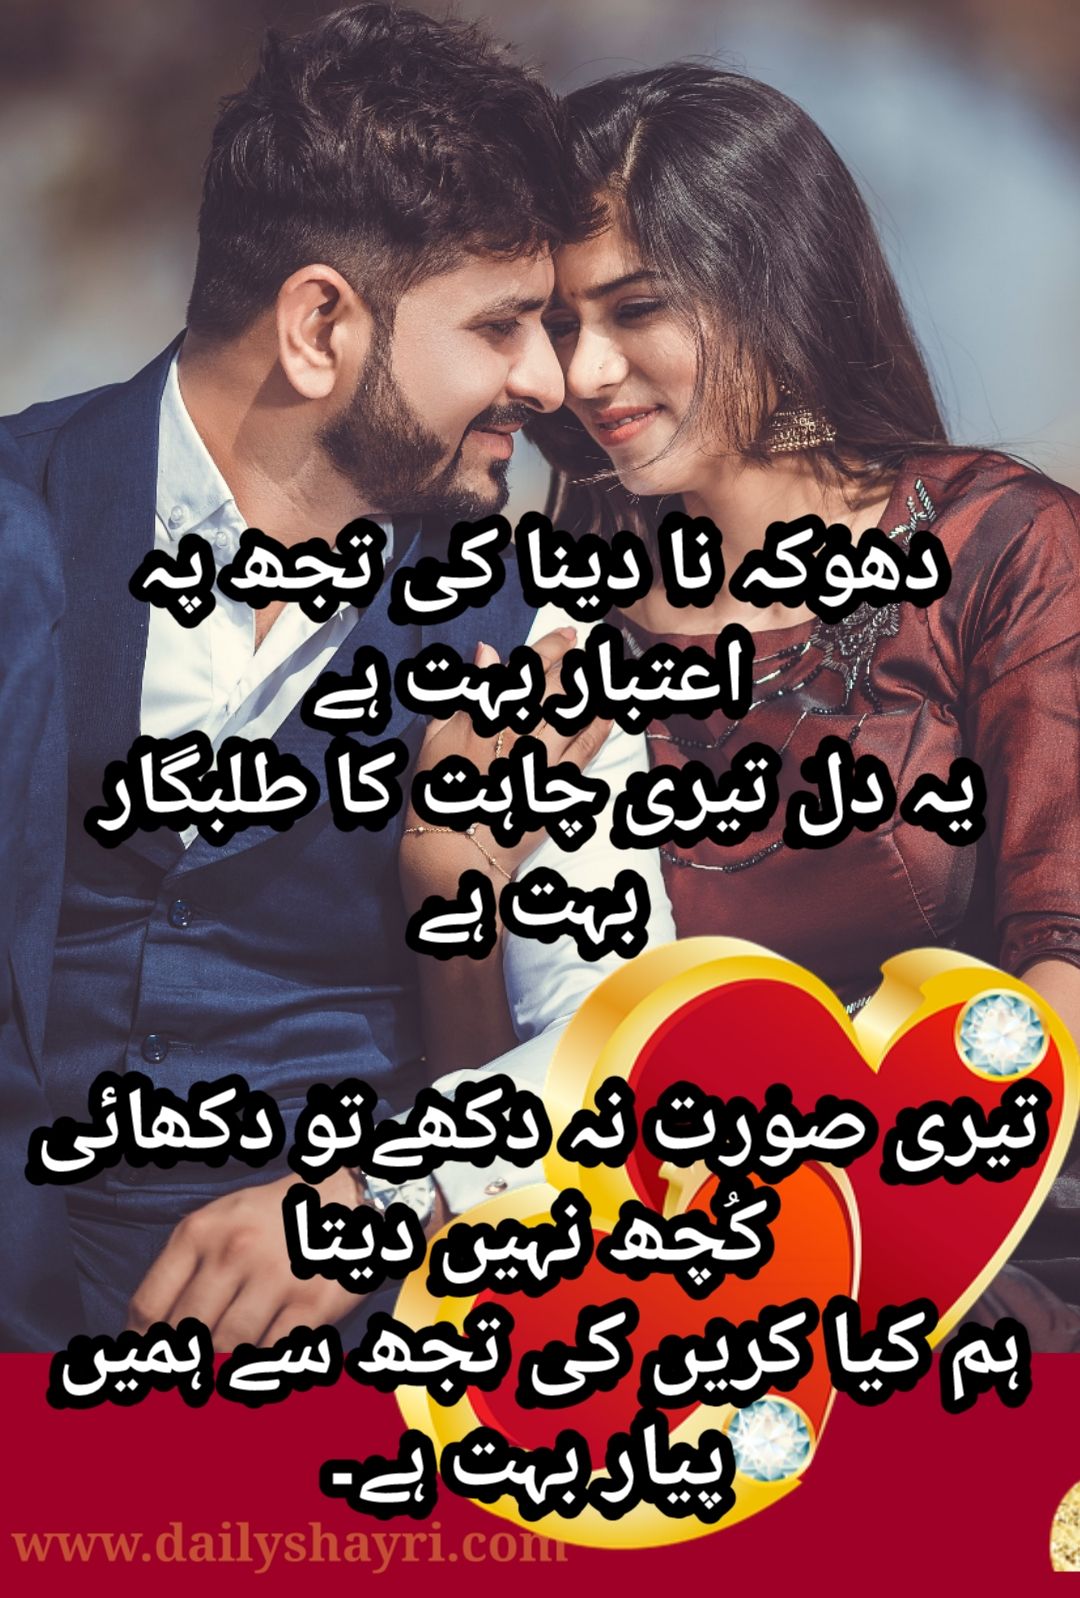 250 New Urdu Shayari hd images On Love – Hindi Shayari Love Shayari Love Quotes Hd Images